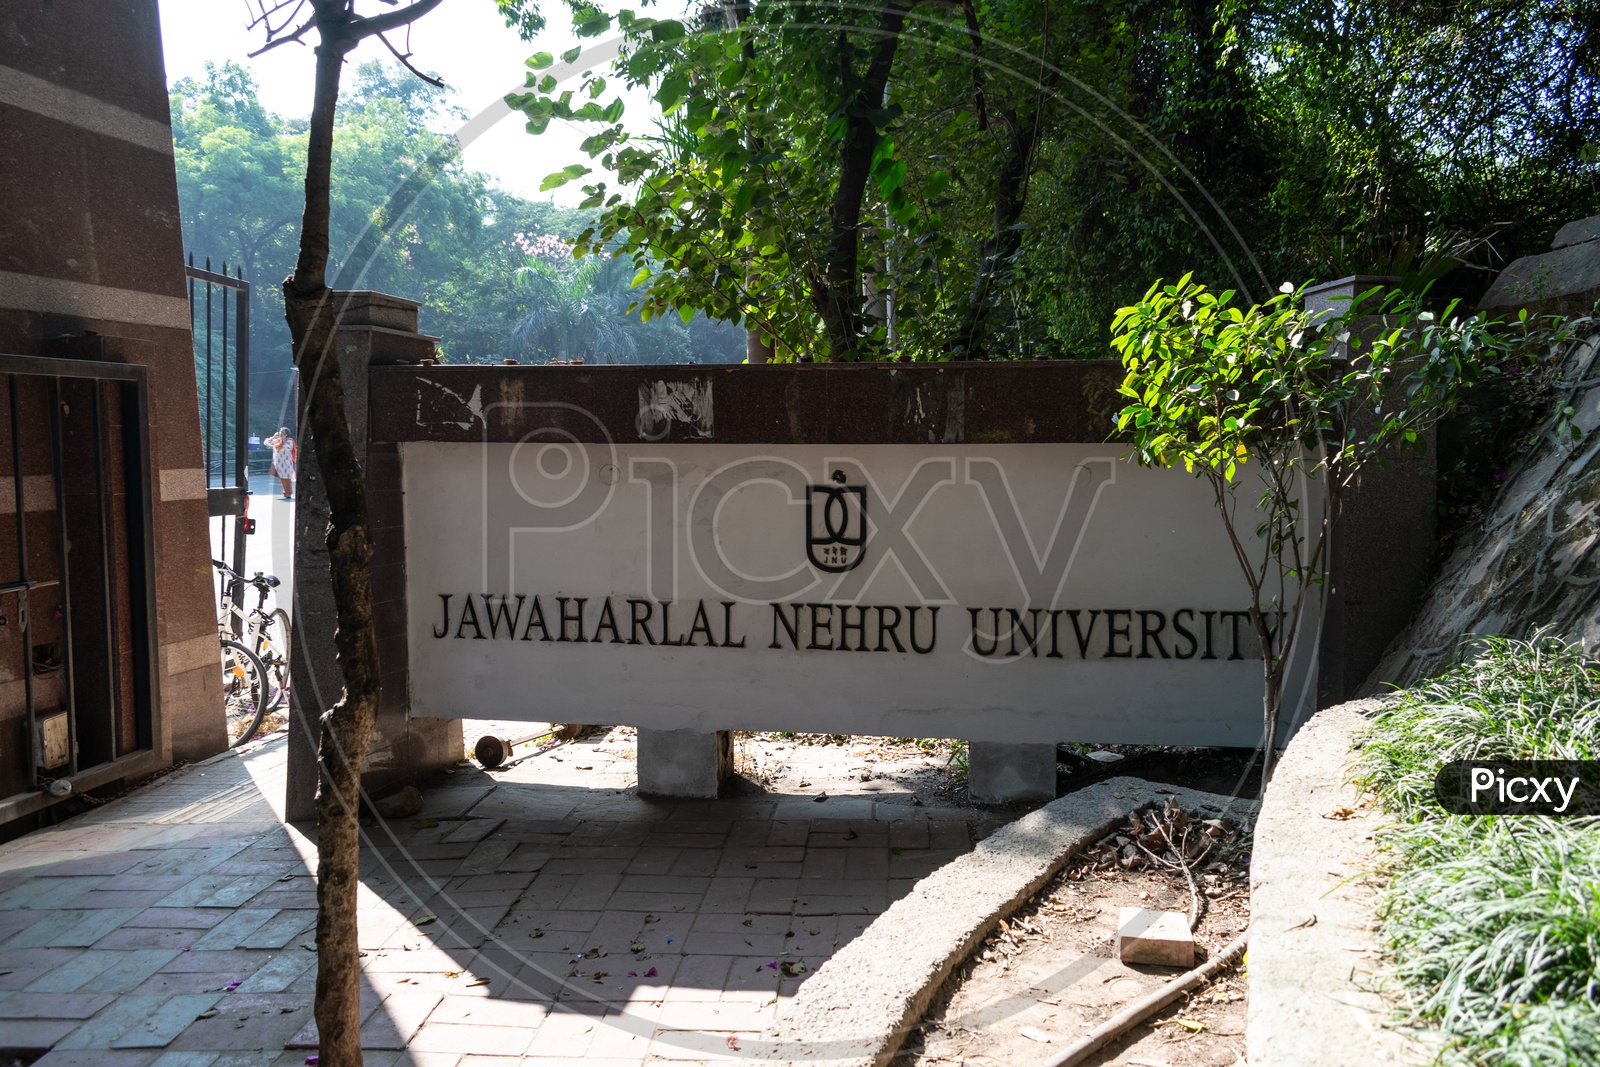 Jawaharlal Nehru University (JNU) entry gate